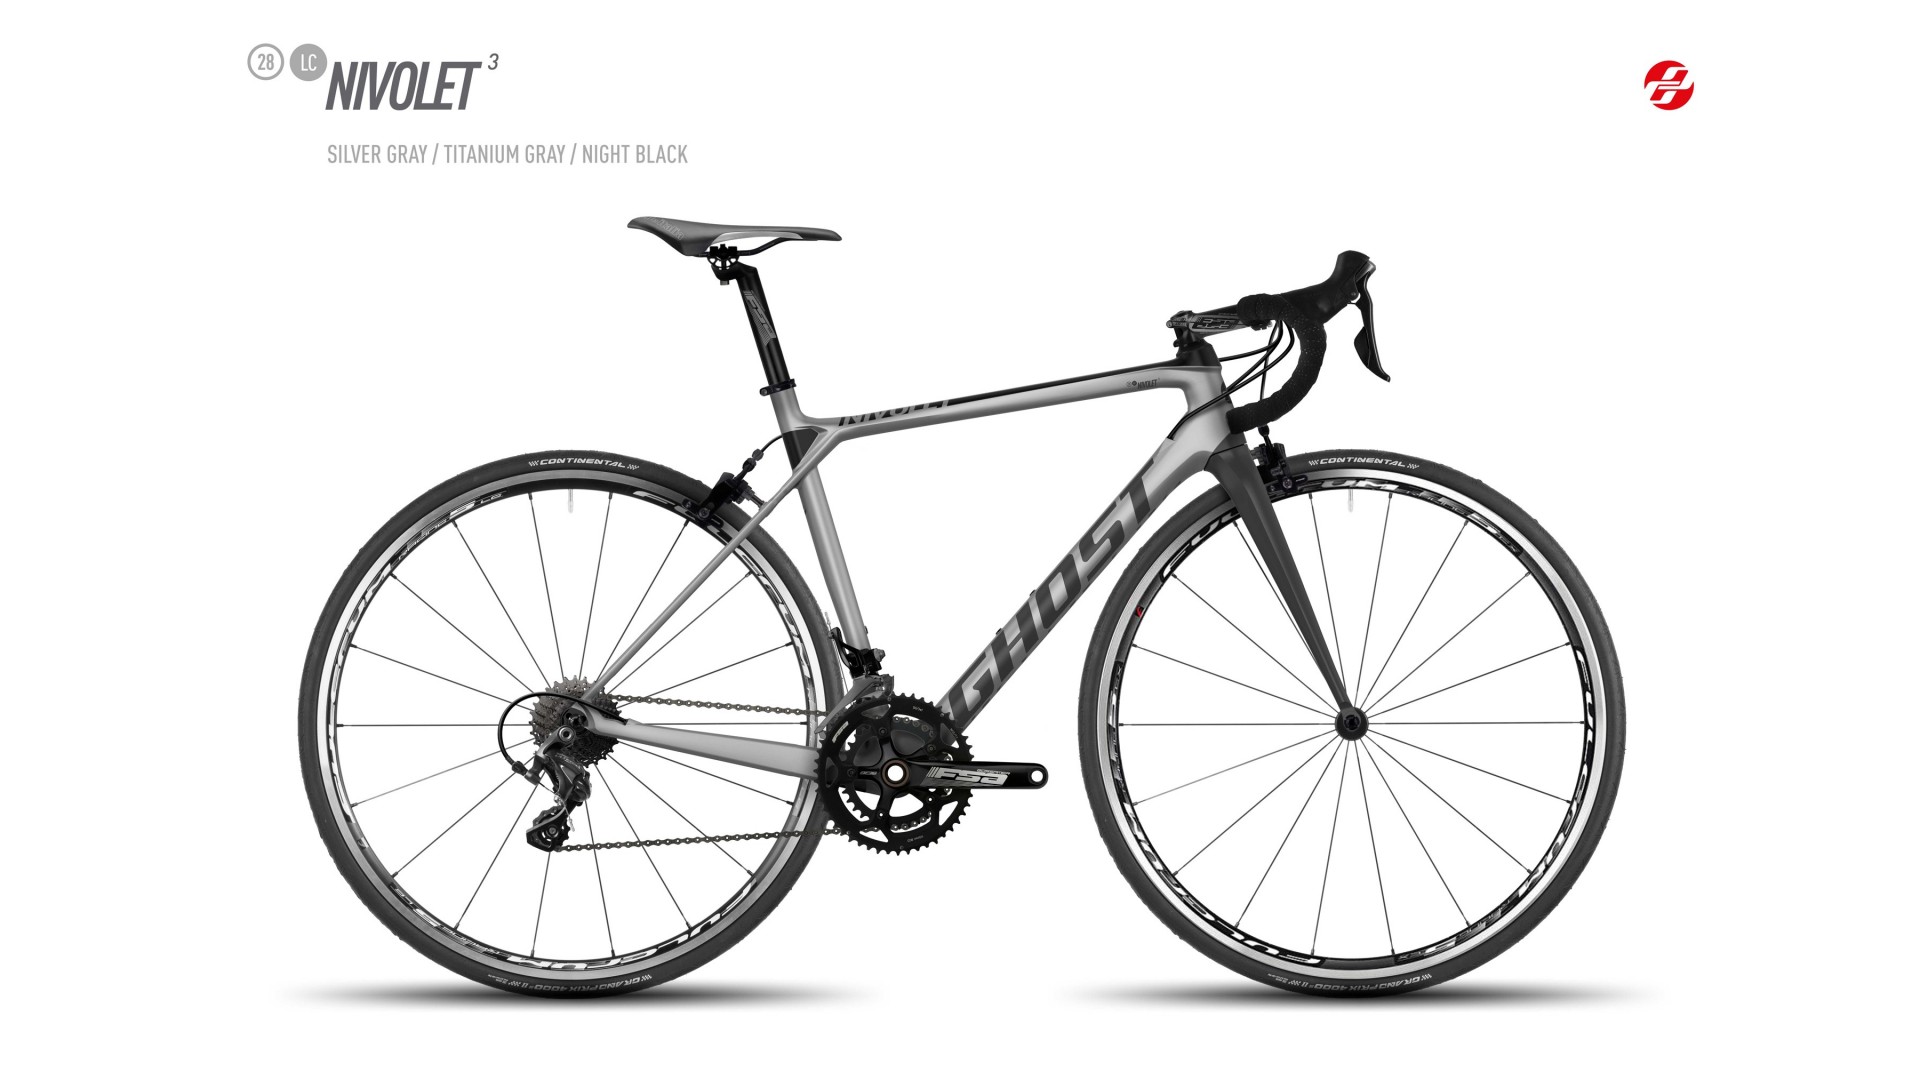 Велосипед GHOST Nivolet 3 LC 28 silvergrey/titaniumgrey/nightblack год 2017